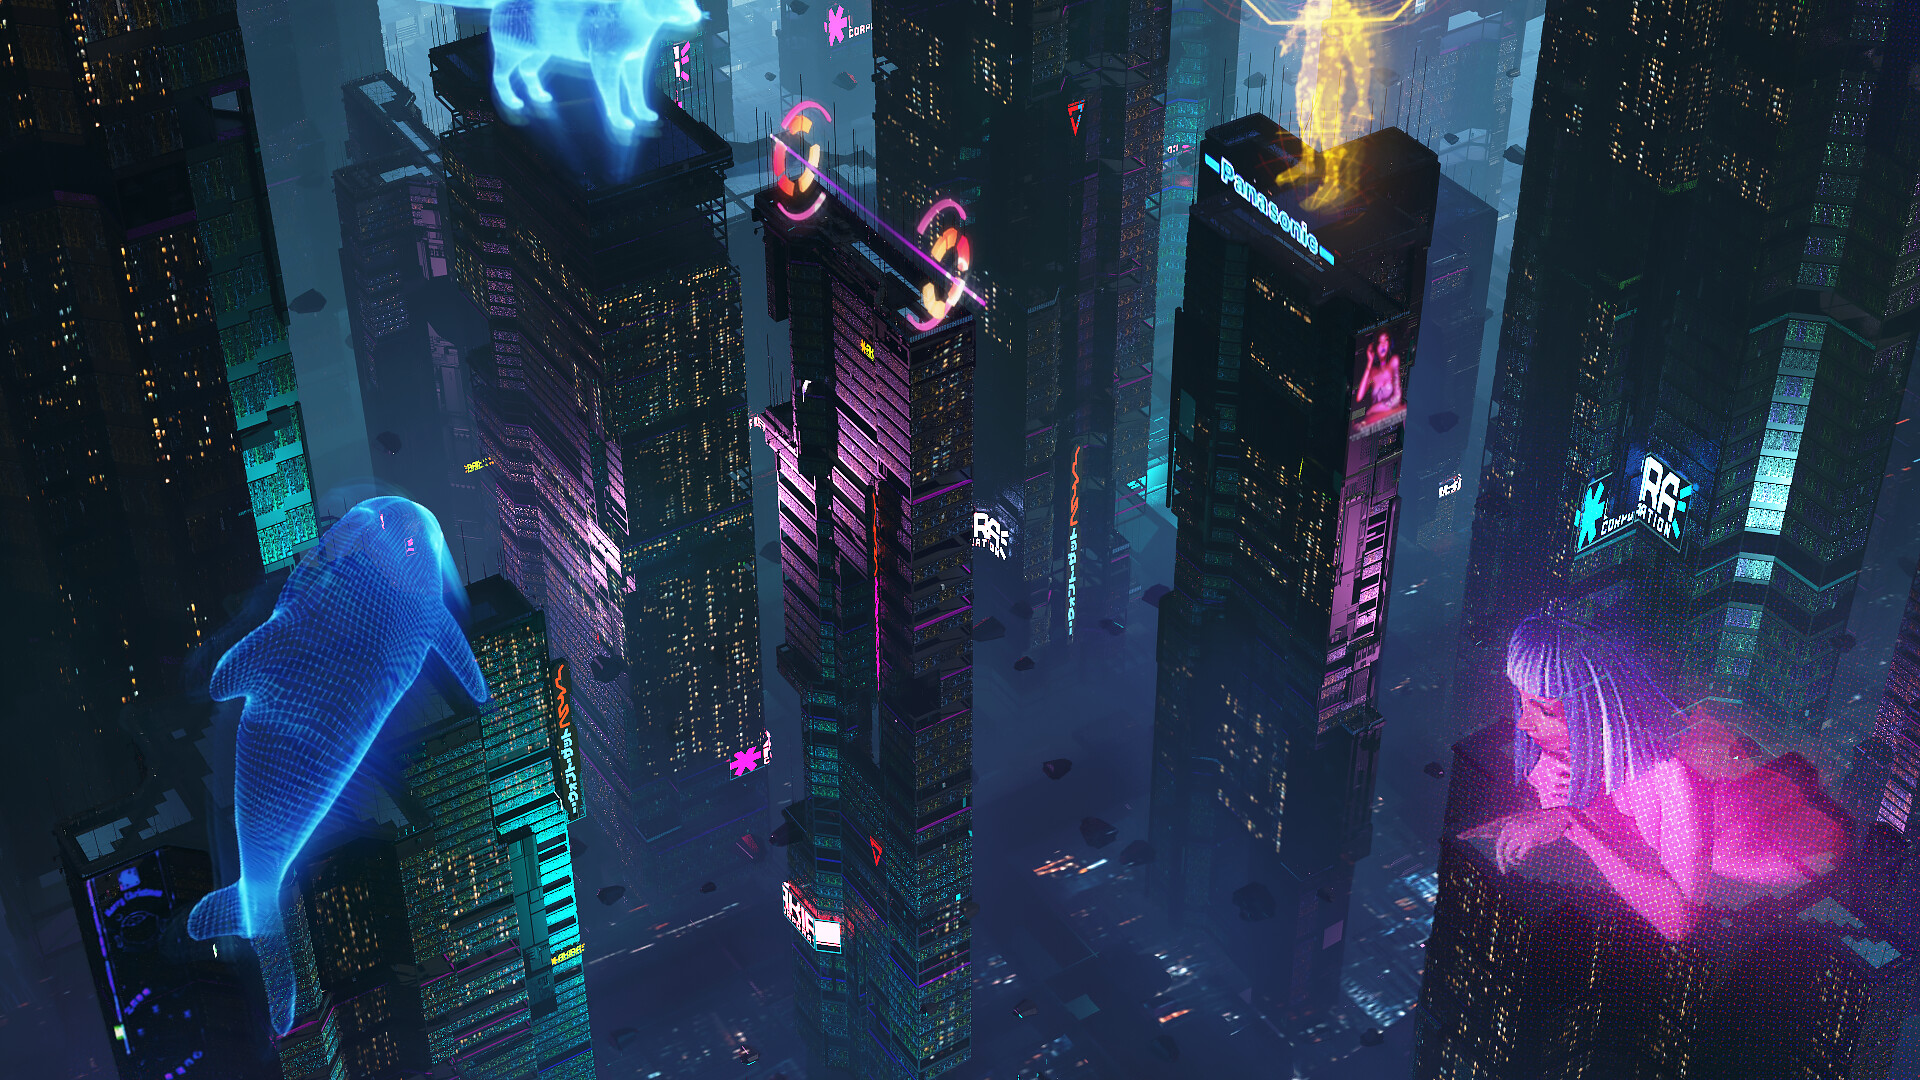 HD wallpaper: animated city wallpaper, cyberpunk, science fiction